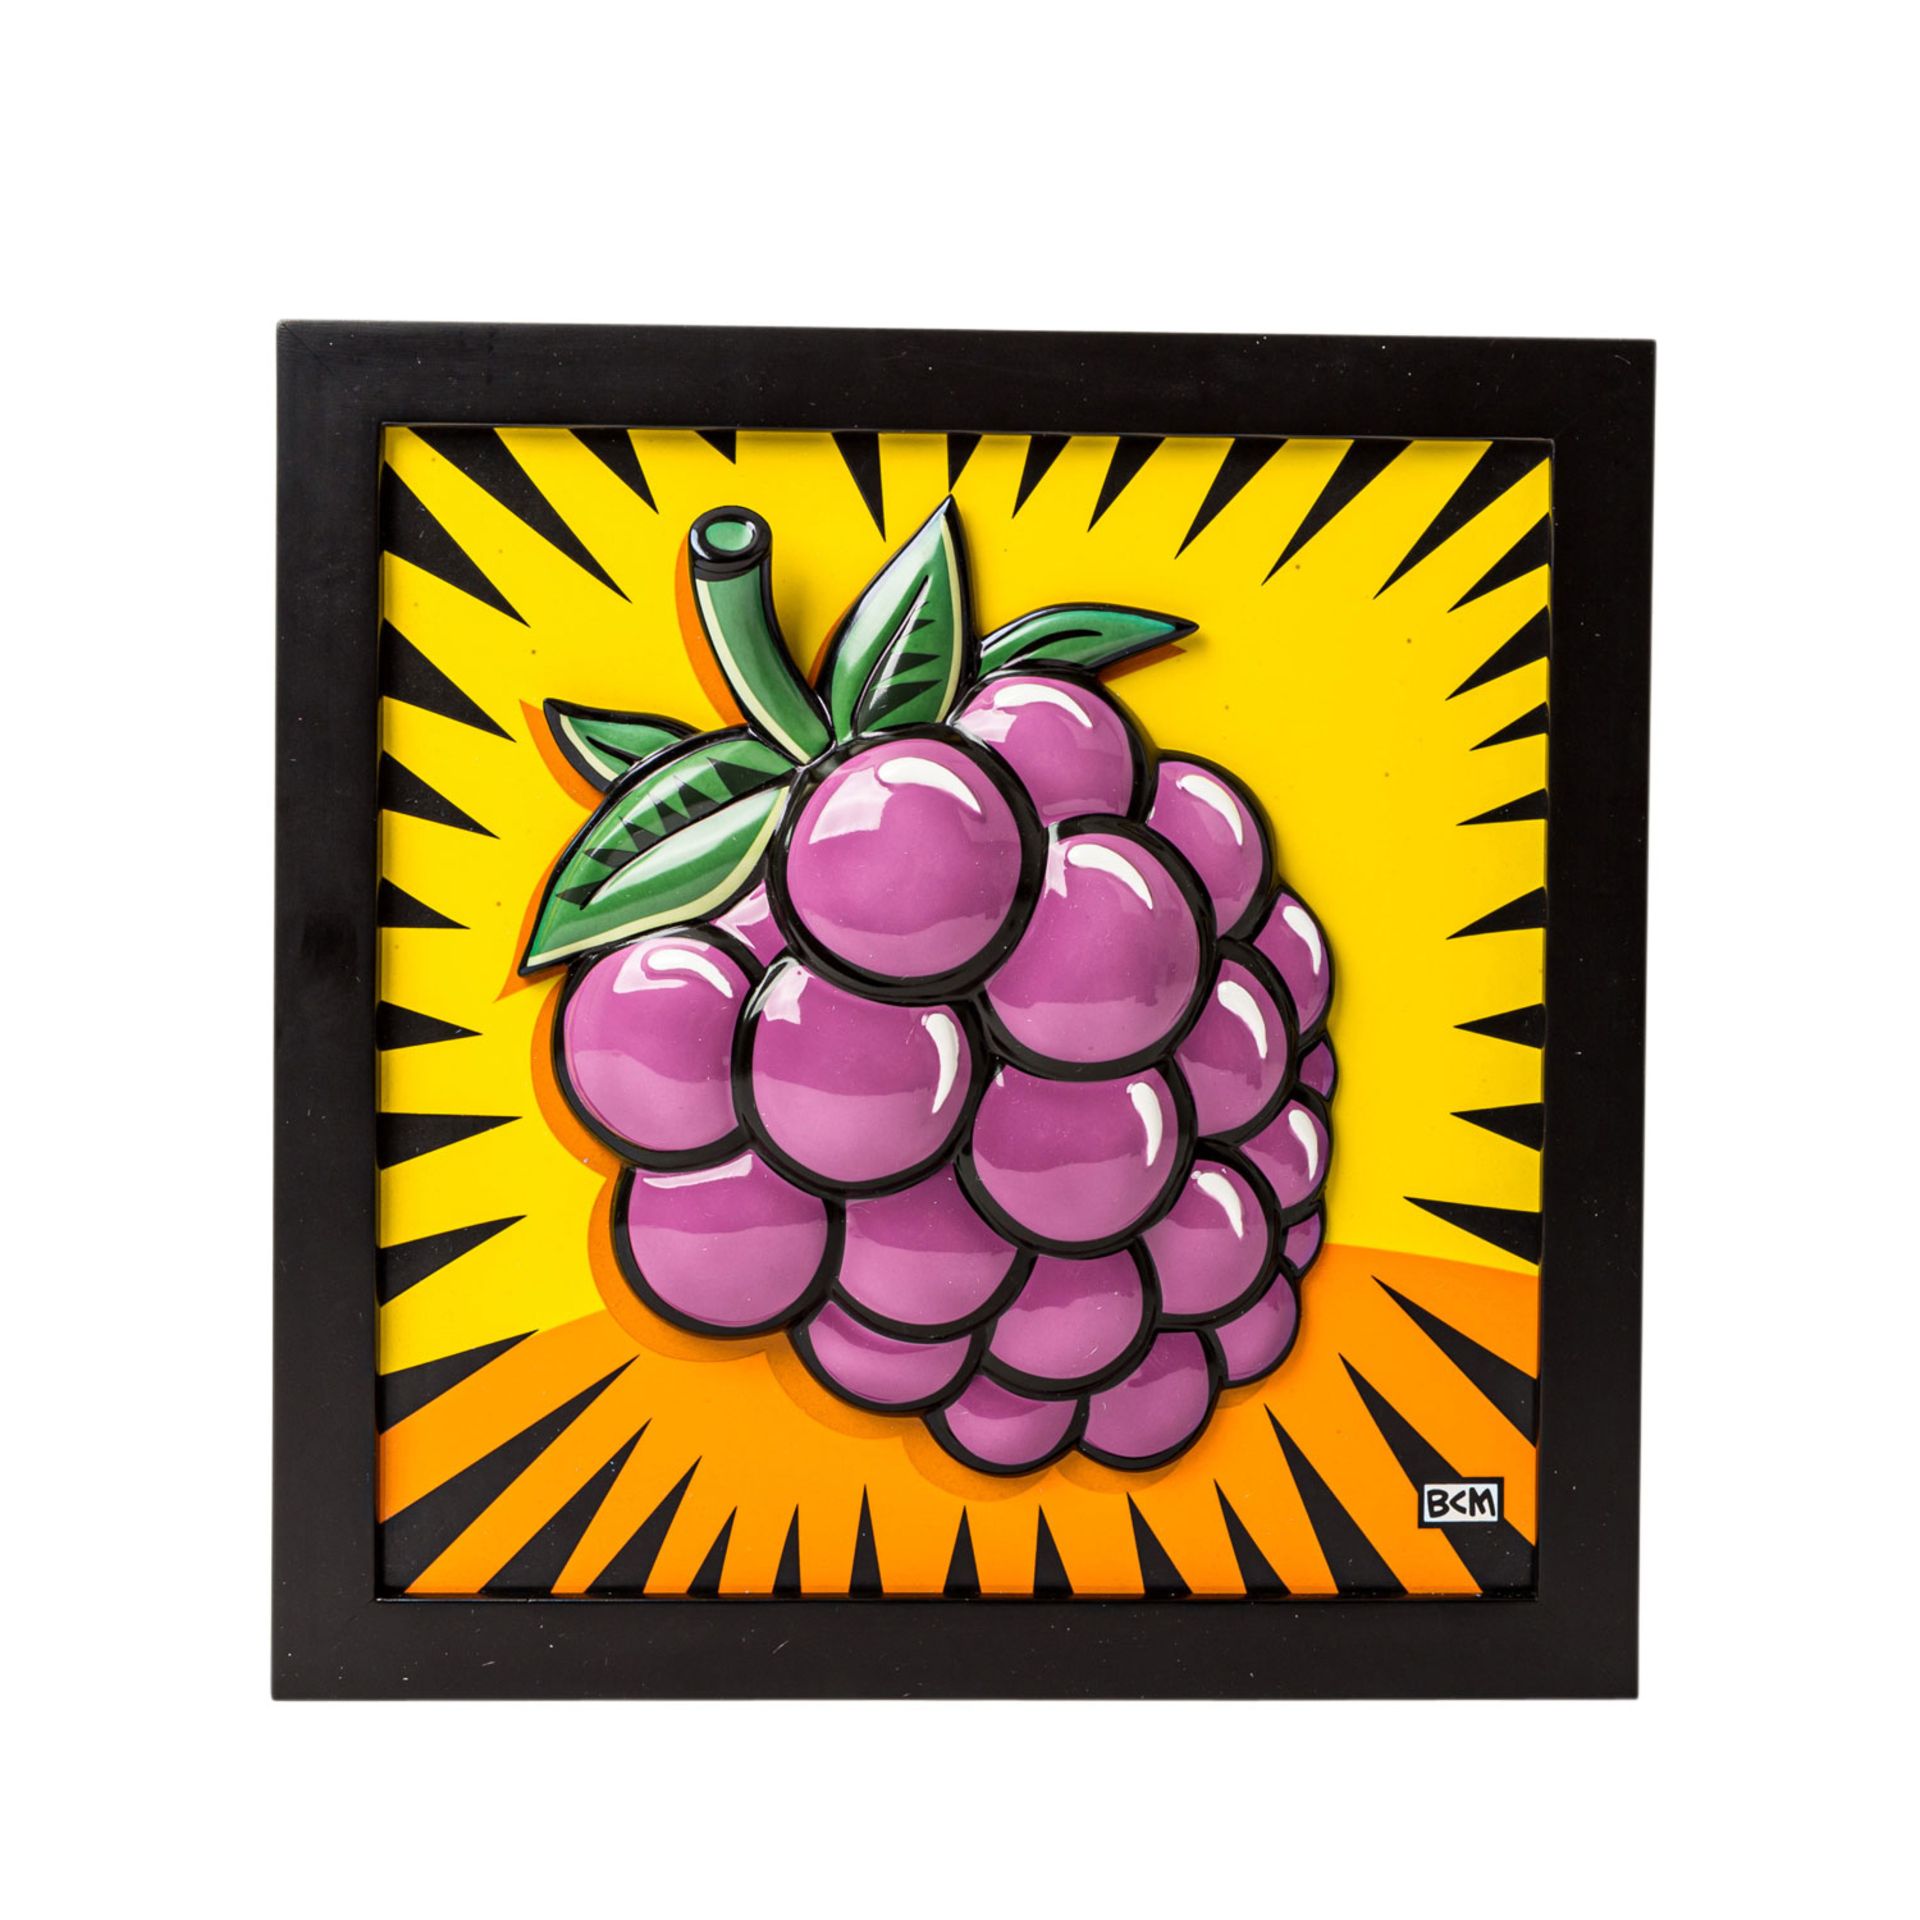 GOEBEL Wandbild 'Raspberry', 21. Jh..ARTIS ORBIS, Entwurf von Burton Morris, ca. 34x34cm, gerahmt.